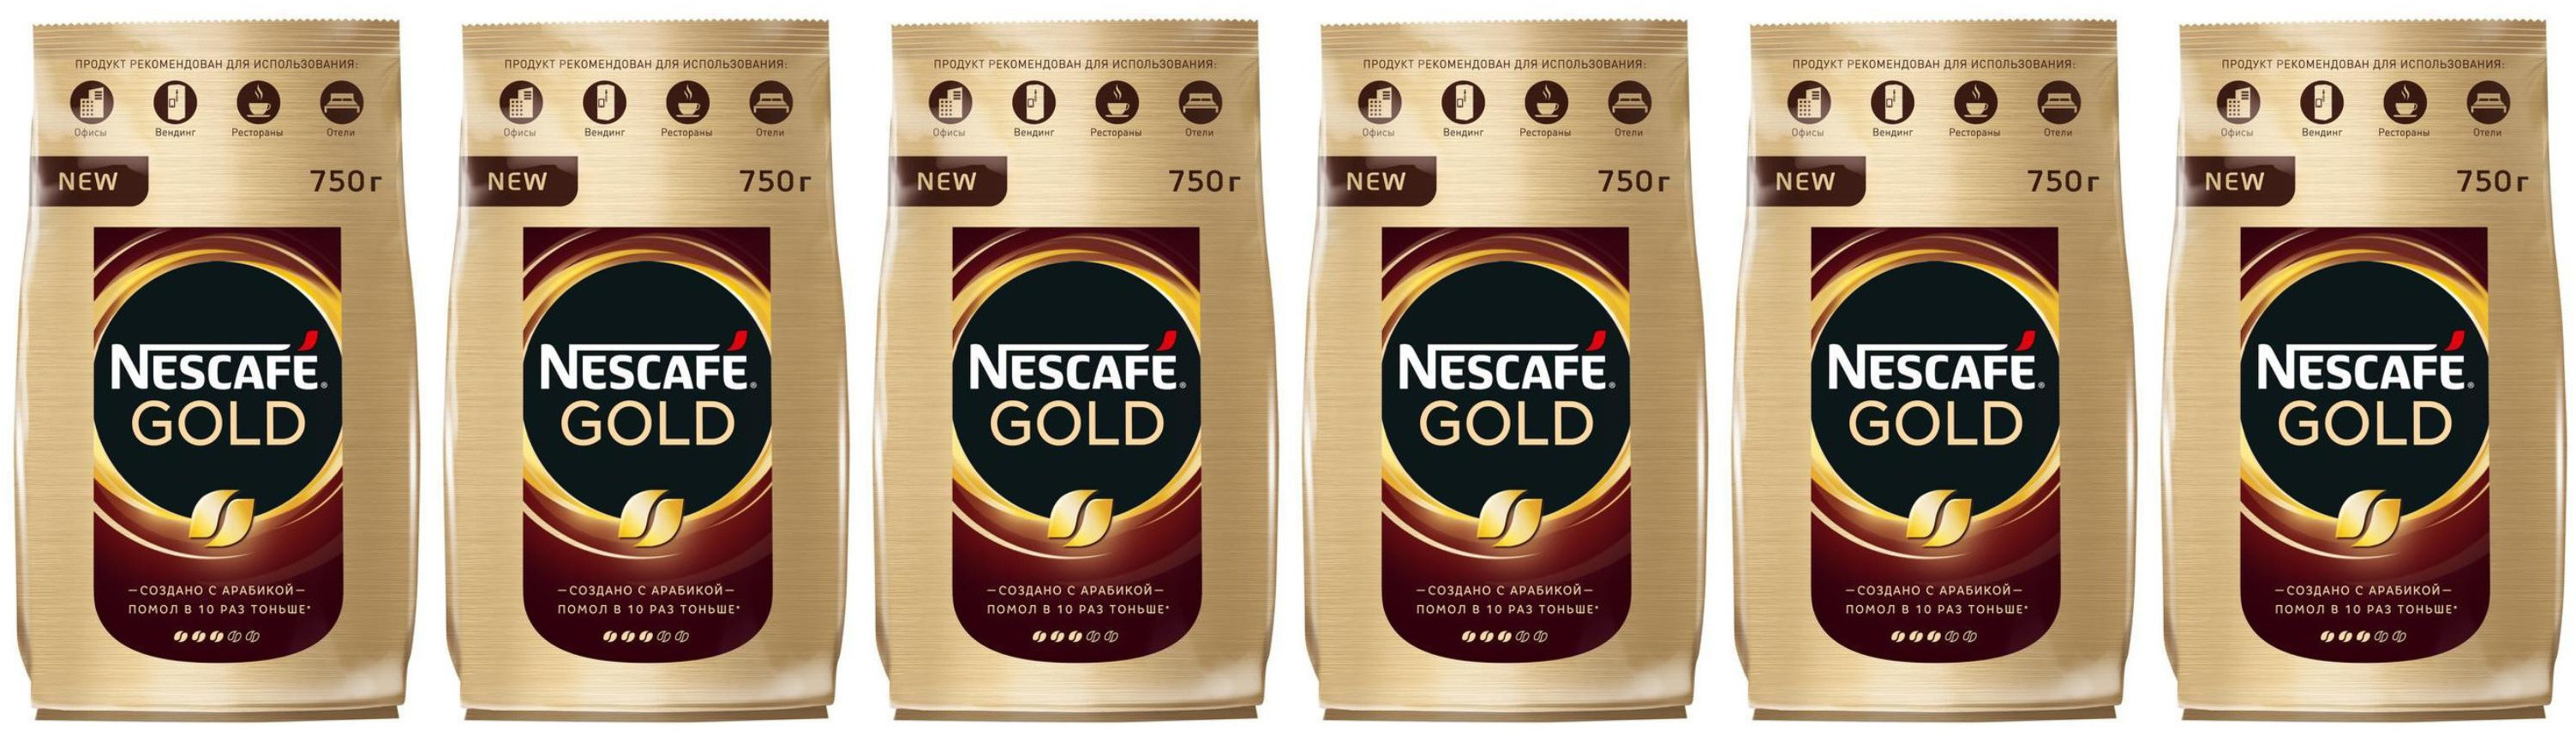 Кофе nescafe gold 900 г. Nescafe Gold 750. Кофе Нескафе Голд 750 гр. Кофе растворимый Nescafe Gold 750 гр. Кофе Нескафе Голд 6.